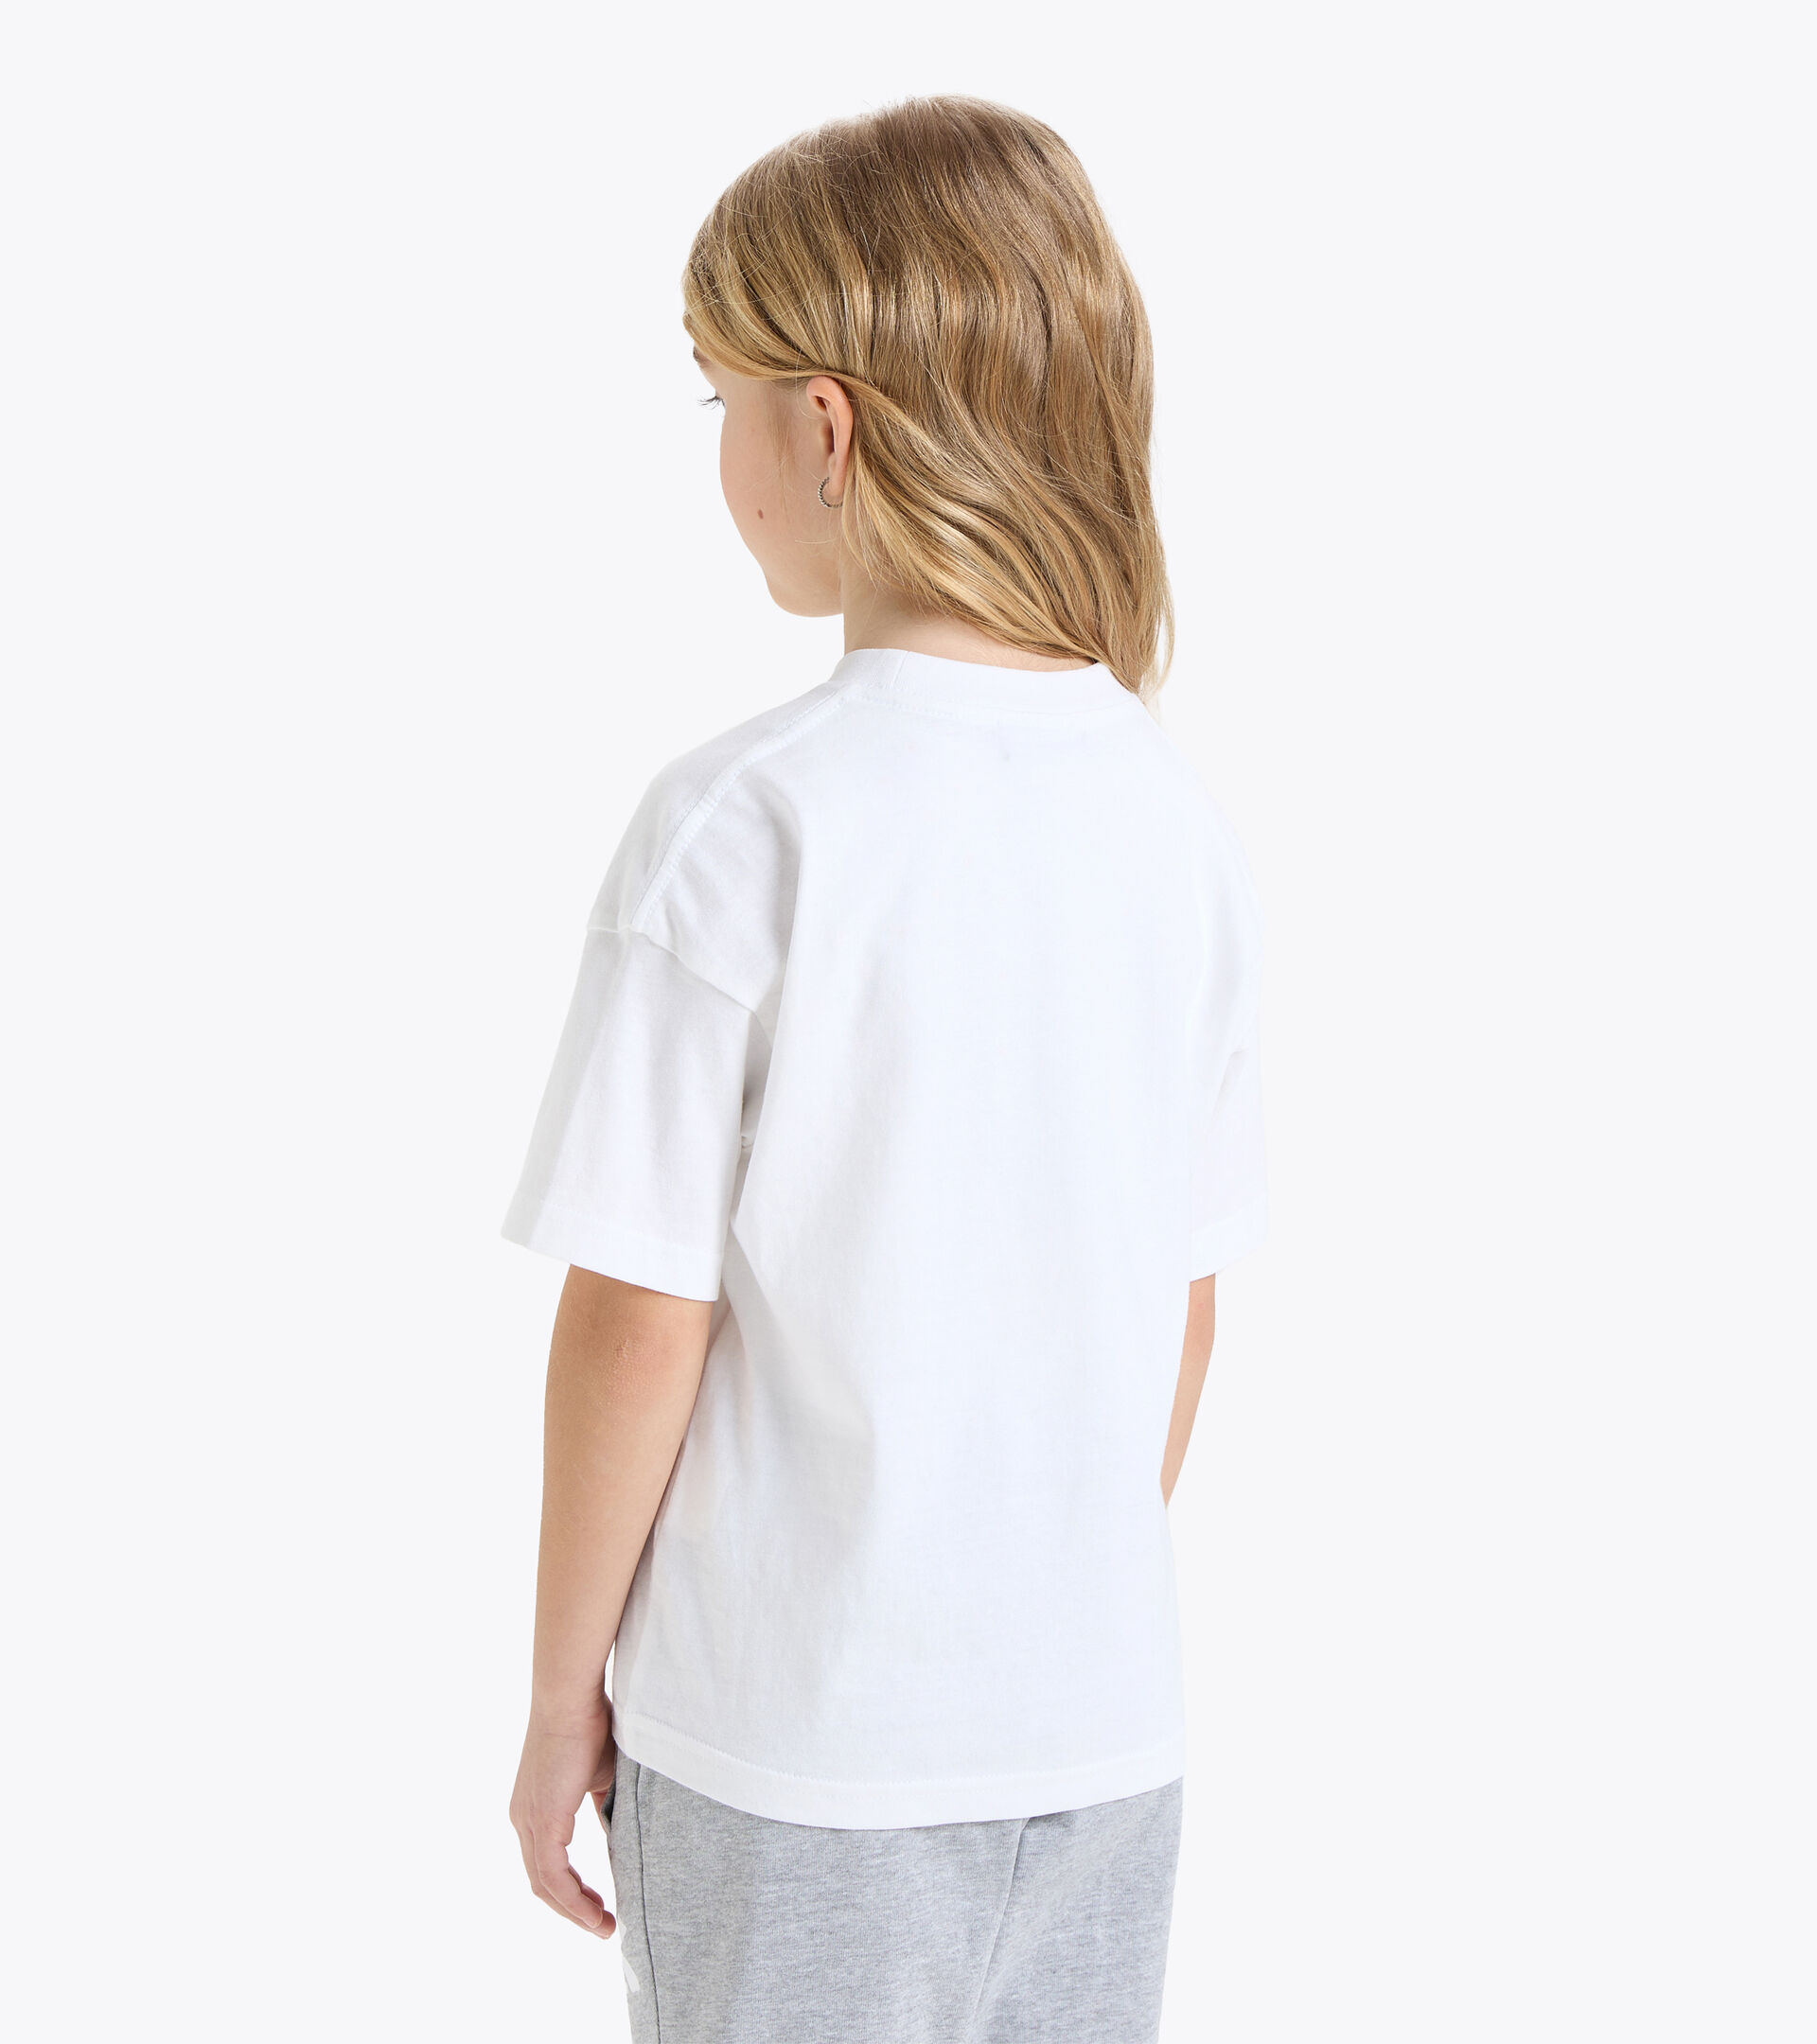 Cotton t-shirt - Kids
 JU.T-SHIRT SS SL OPTICAL WHITE - Diadora